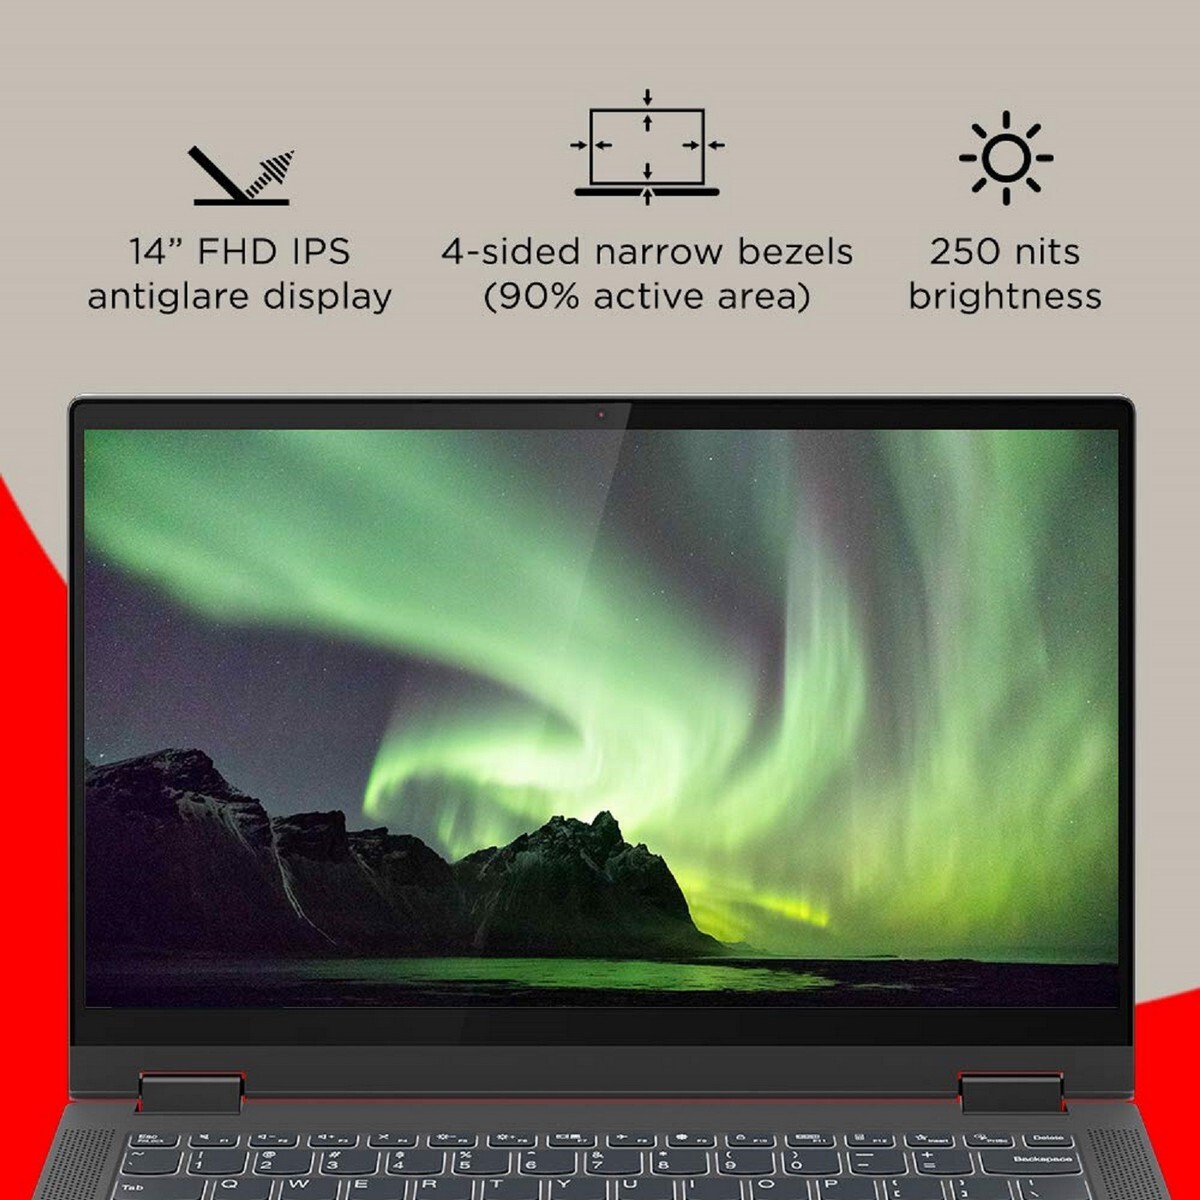 Lenovo IdeaPad Flex 5 Ryzen 5 8 GB/512 GB SSD/Windows 11 Home  Laptop